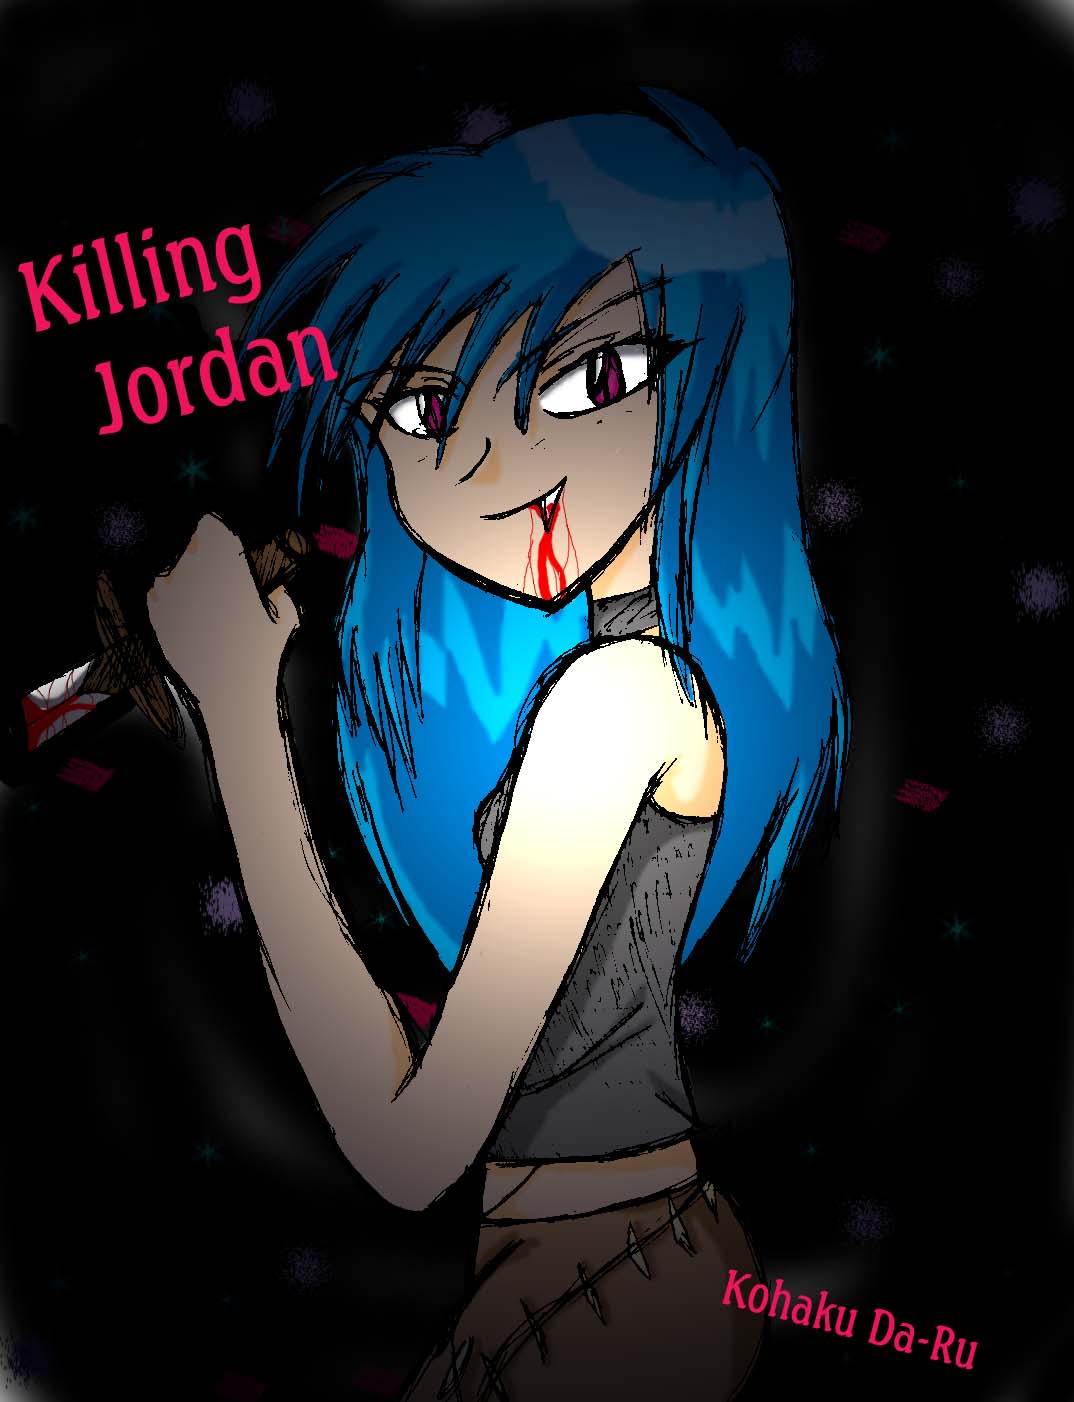 Killing Jordan by kohaku_theblackwolf